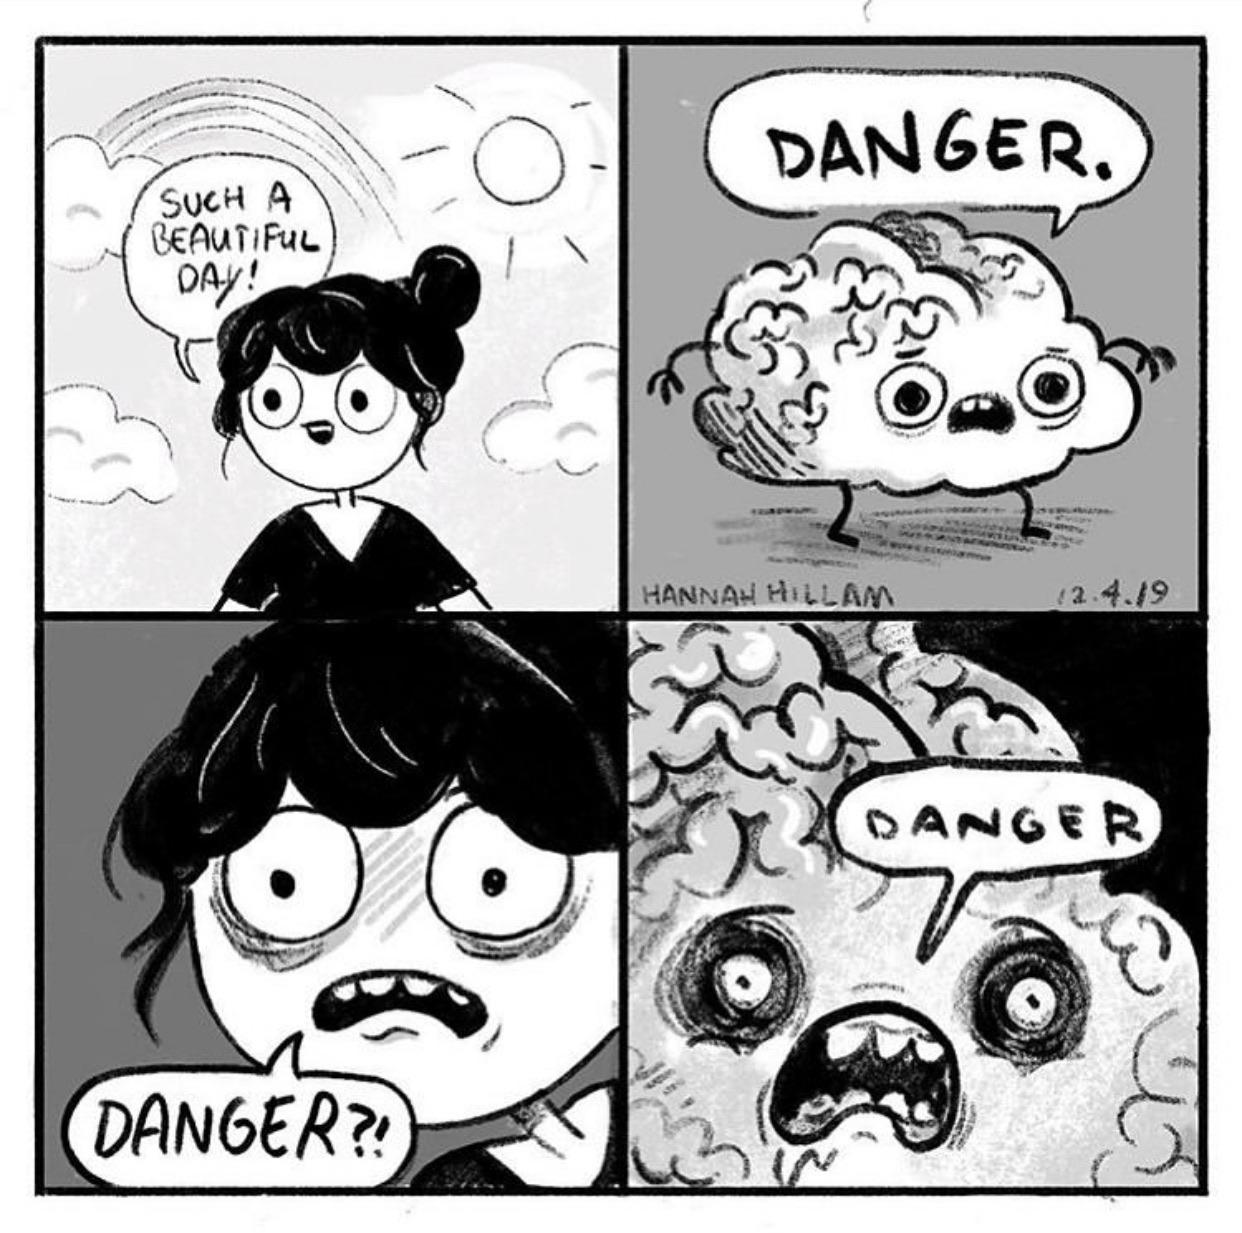 Depression, Wraith, Danger depression memes Depression, Wraith, Danger text: SUCH A DANGER?! DANCER. 82 4.19 